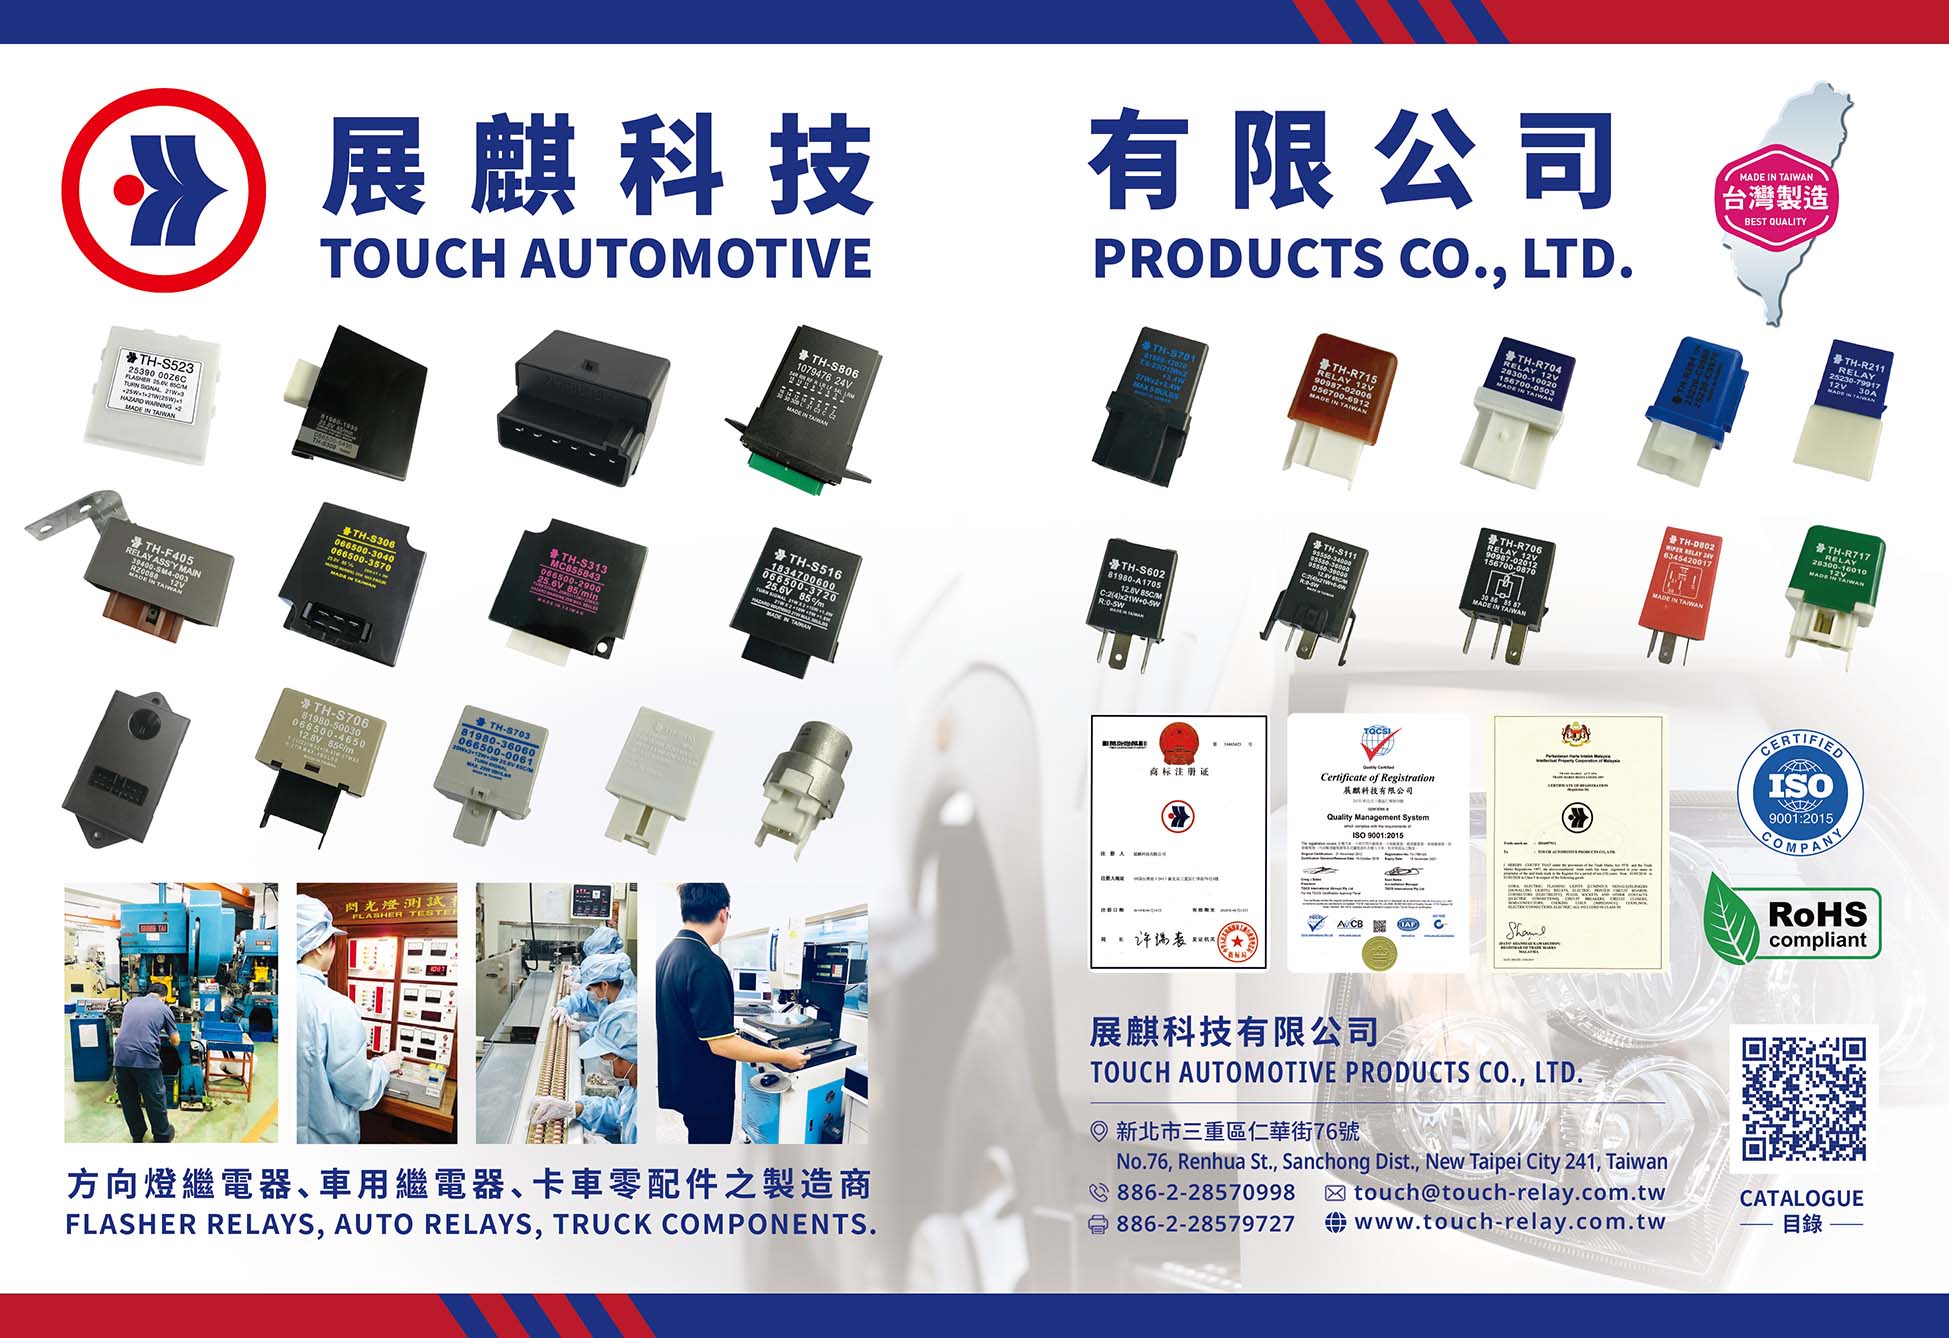 TOUCH AUTOMOTIVE PRODUCTS CO., LTD.